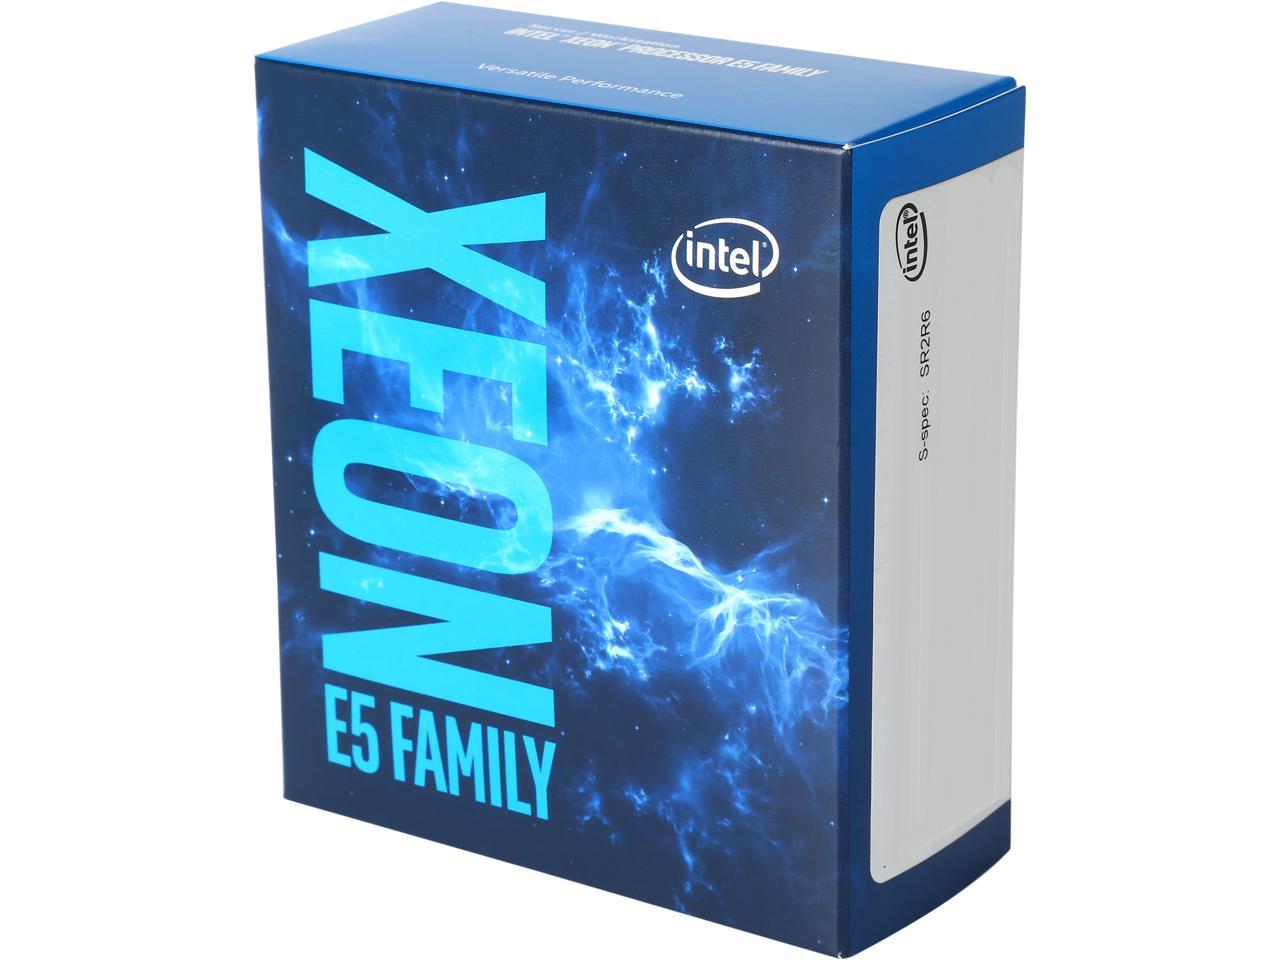 Intel Xeon E5-2620 V4 Broadwell-EP 2.1 GHz 8 x 256KB L2 Cache 20MB L3 Cache LGA 2011-3 85W BX80660E52620V4 Server Processor